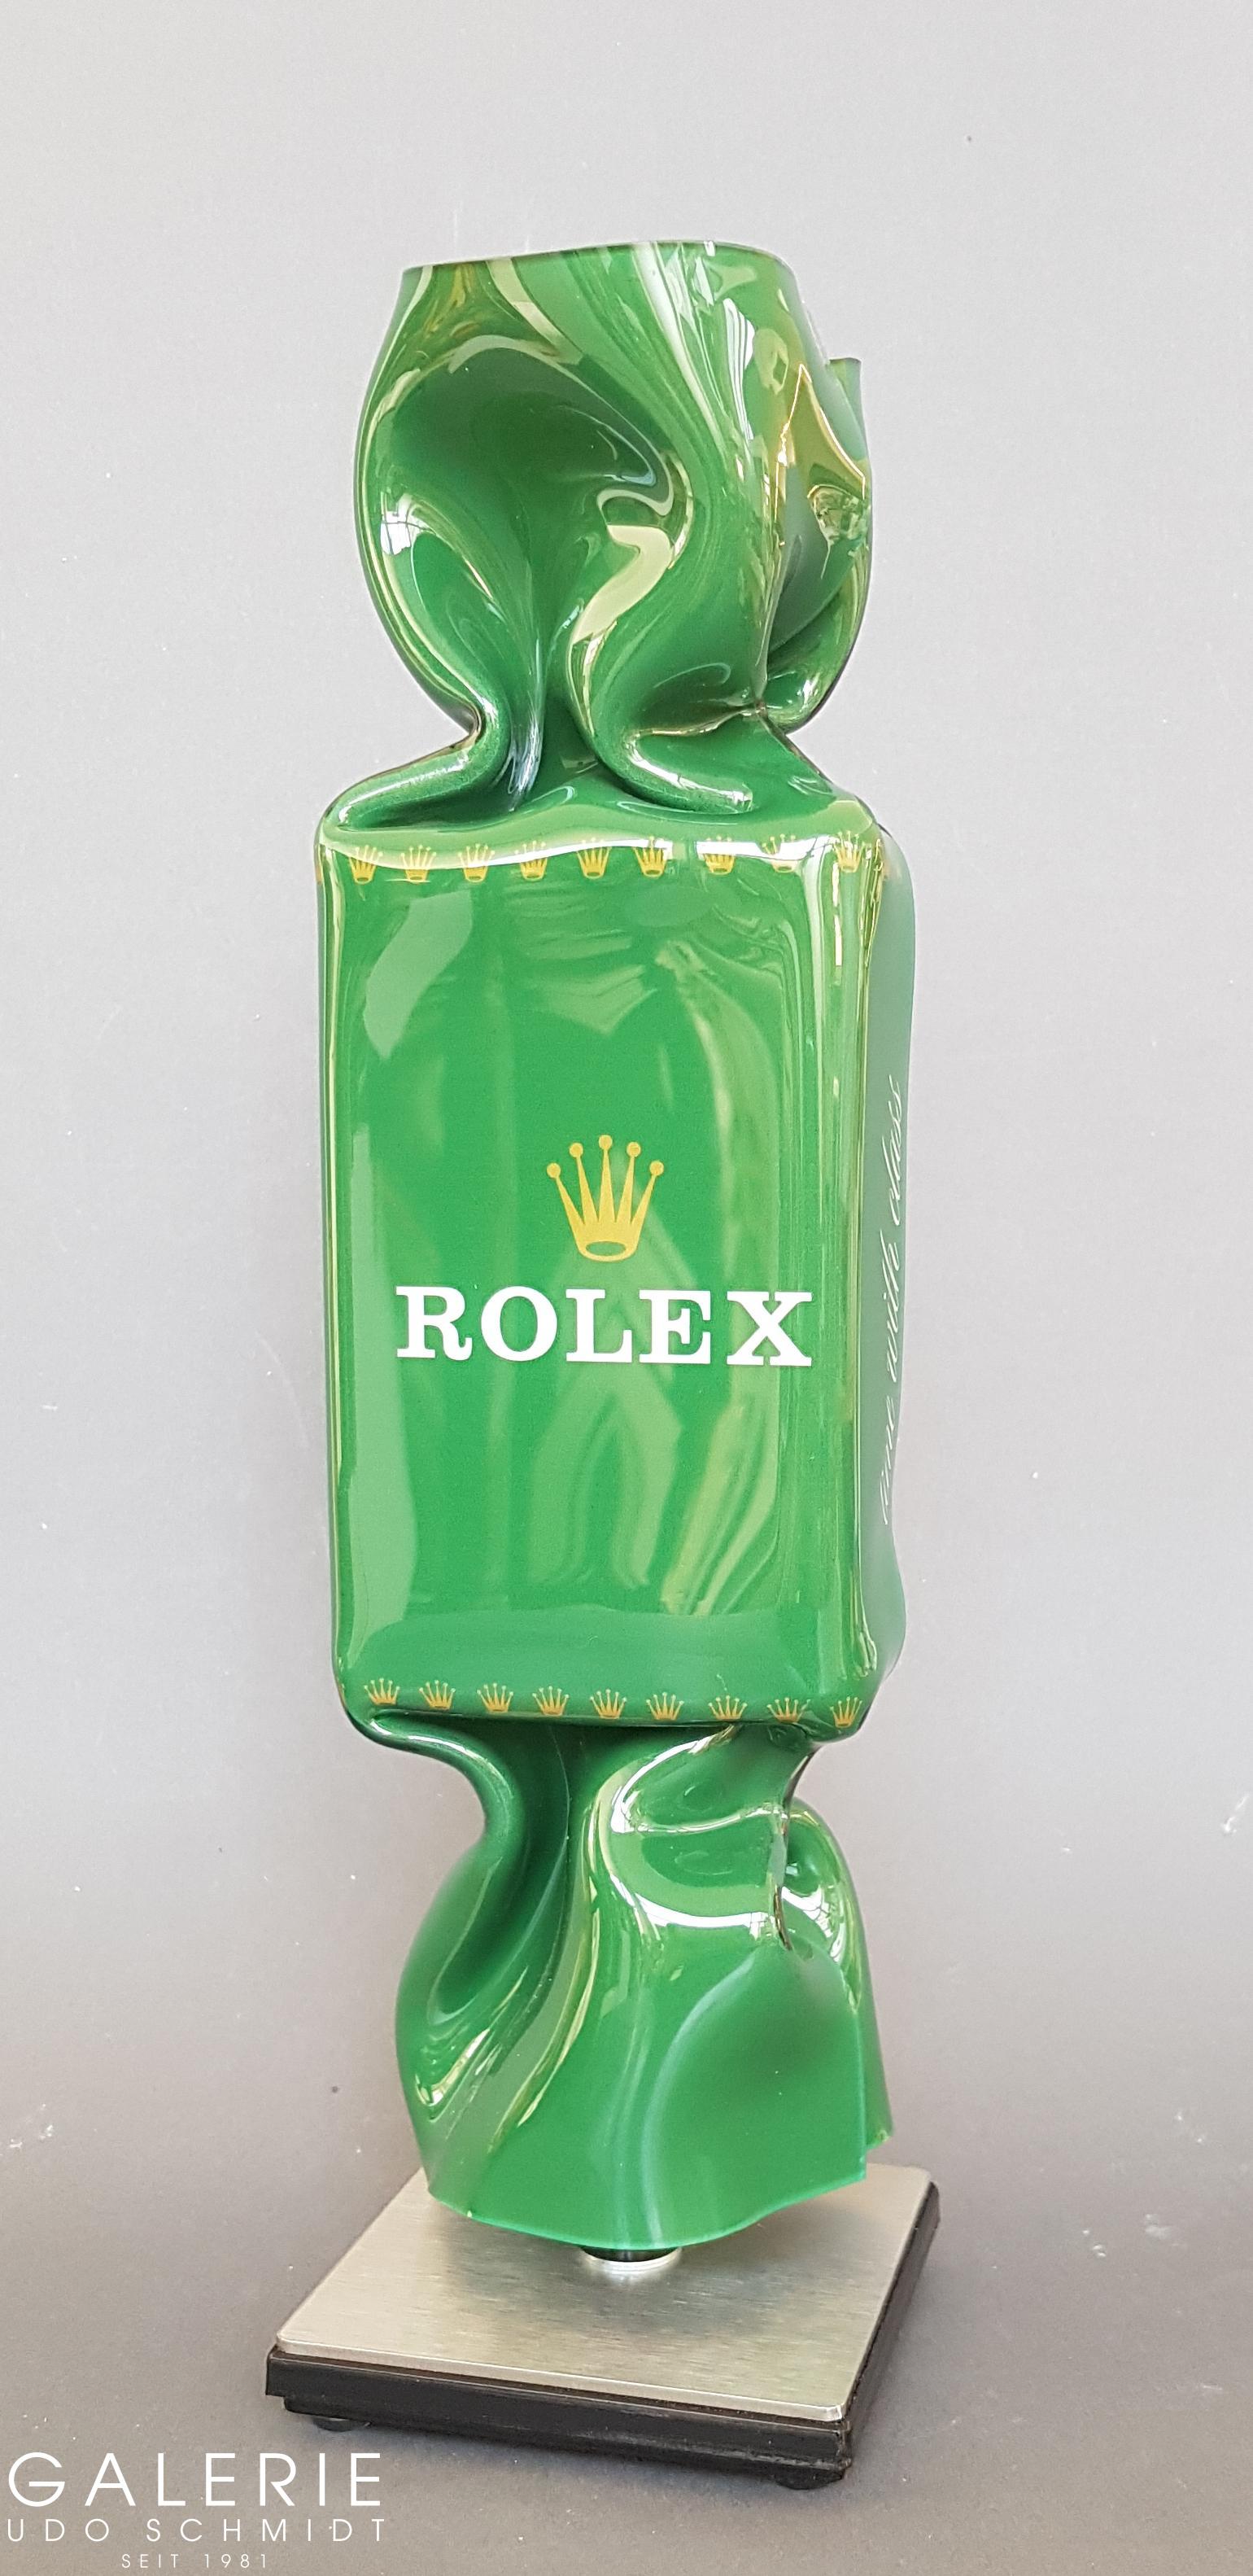 Art Candy Toffee: Rolex